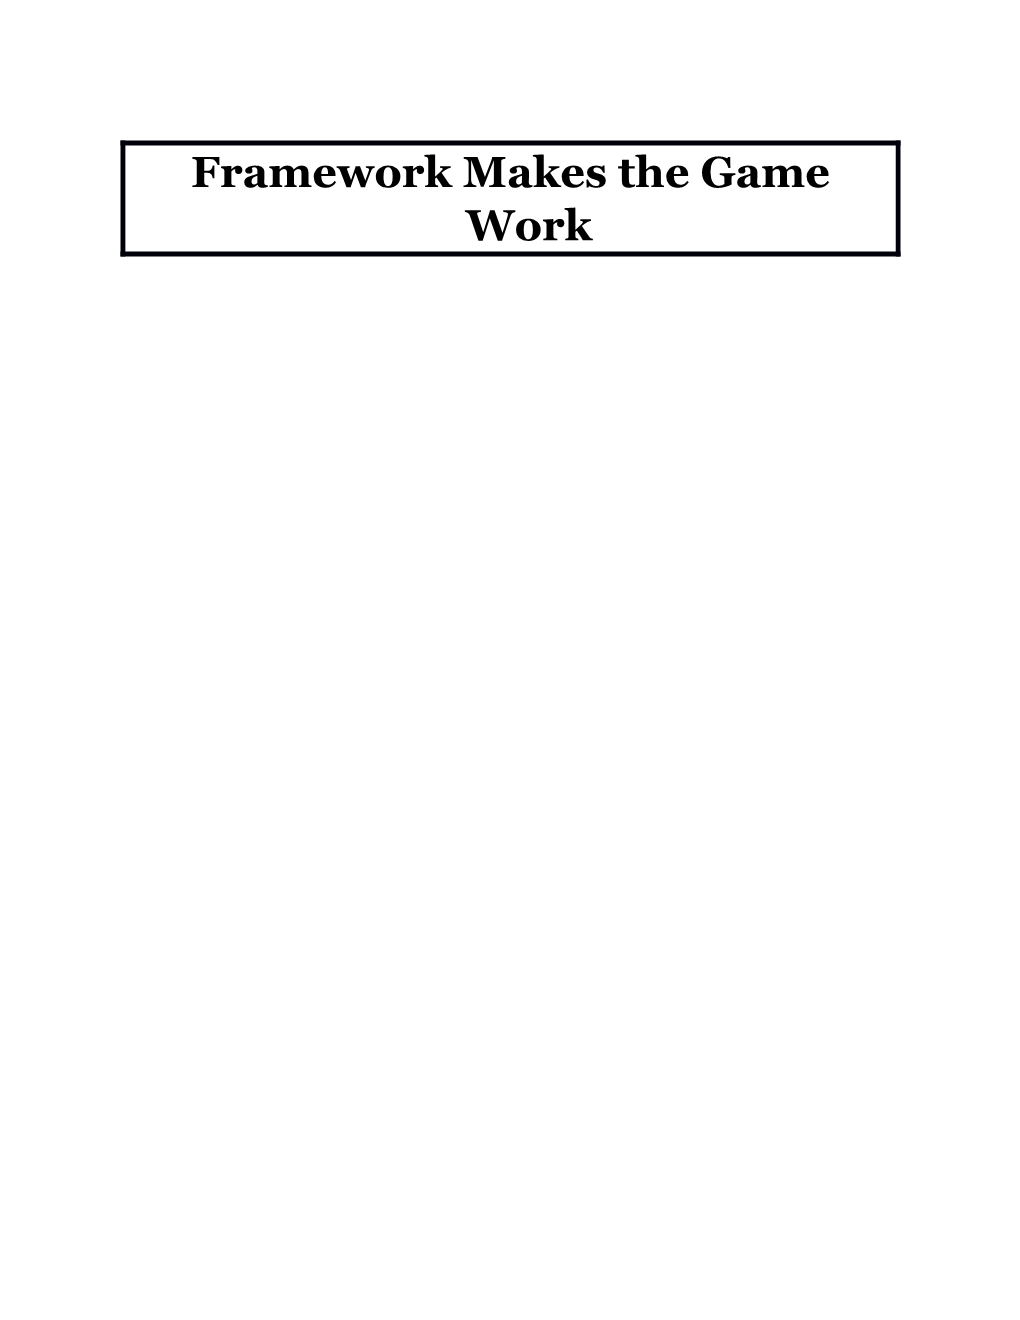 Framework Makes the Game Work